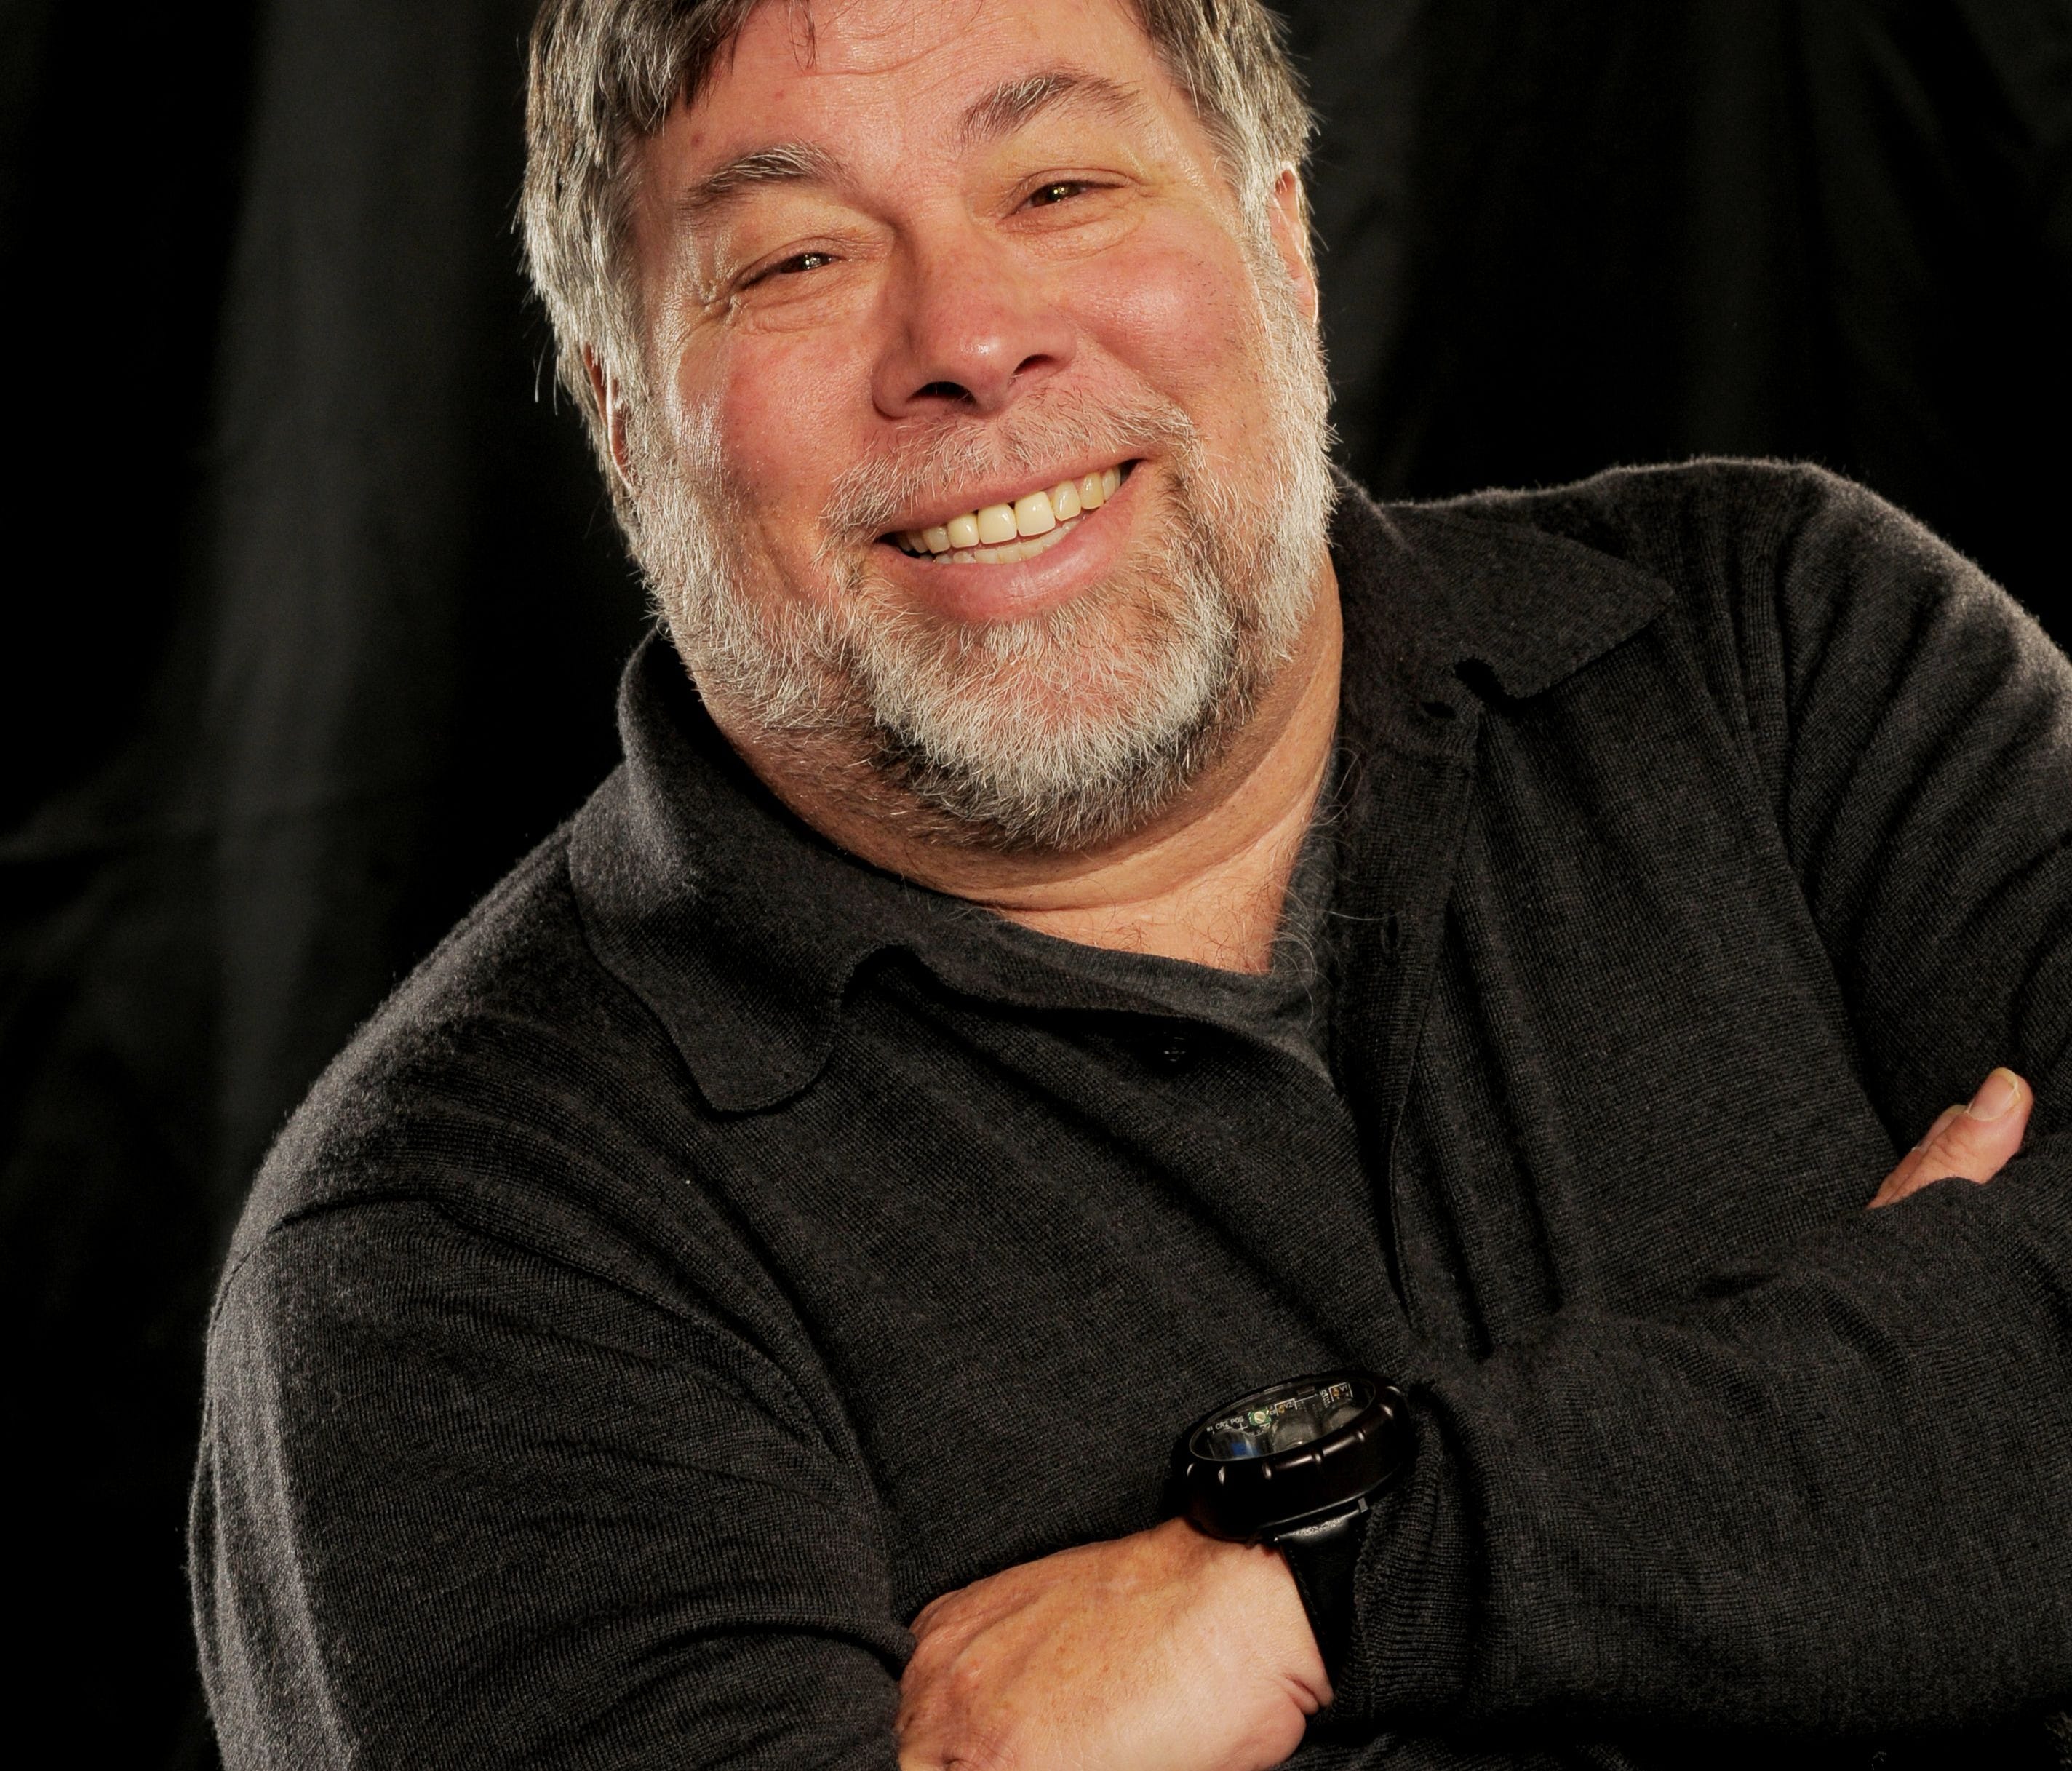 Apple co-founder Steve Wozniak looks into the future on show.